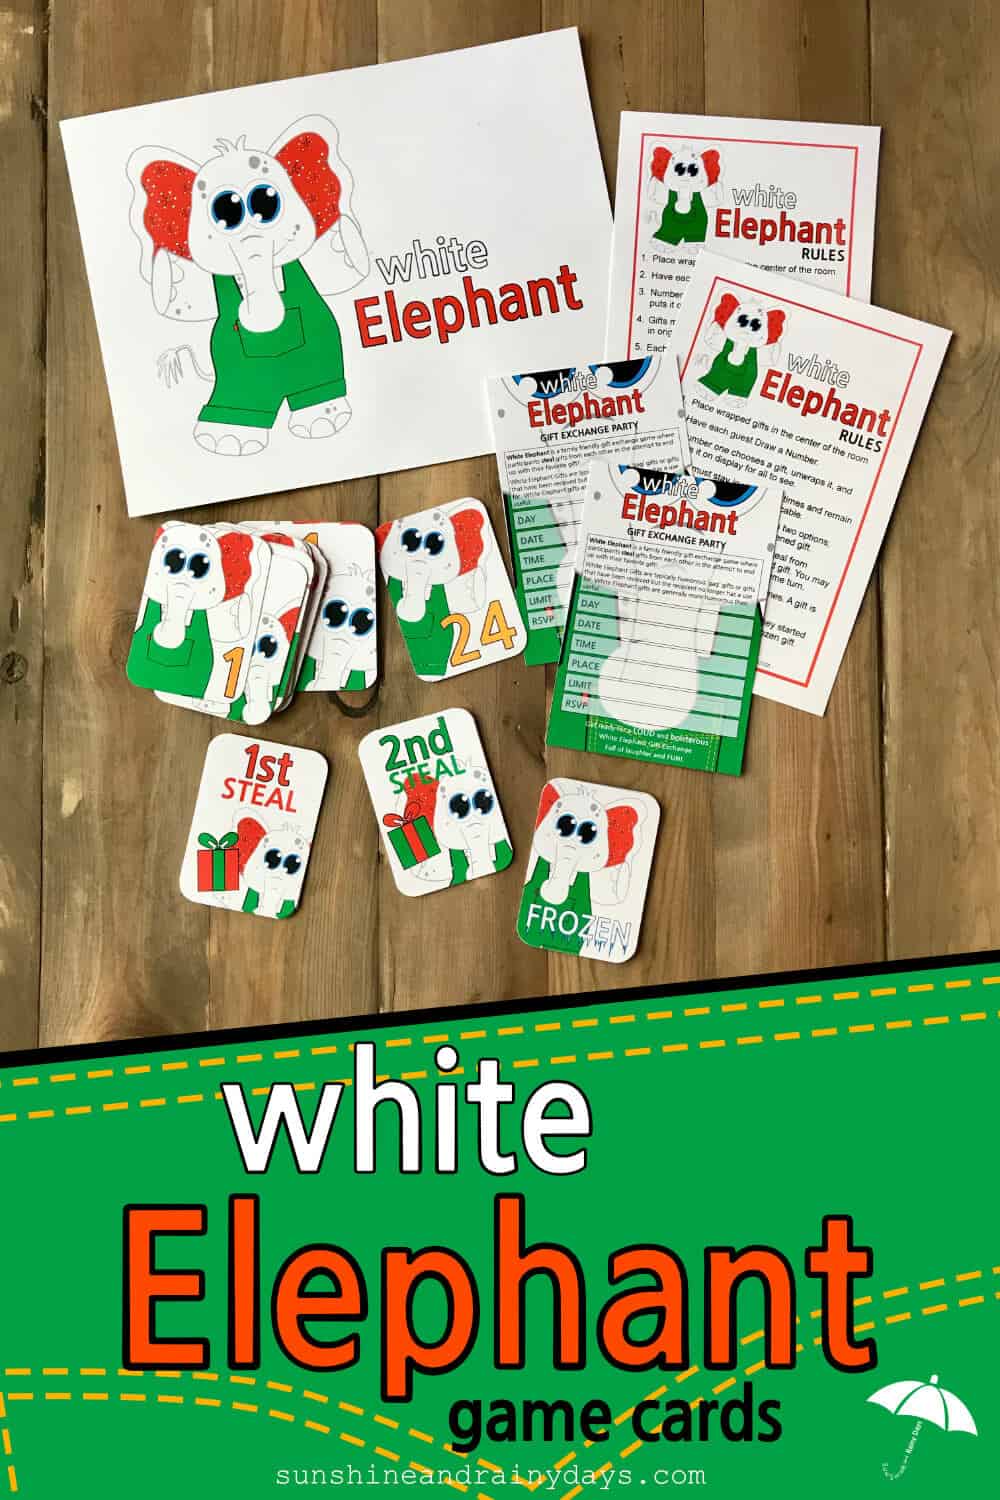 White Elephant Gift Themes